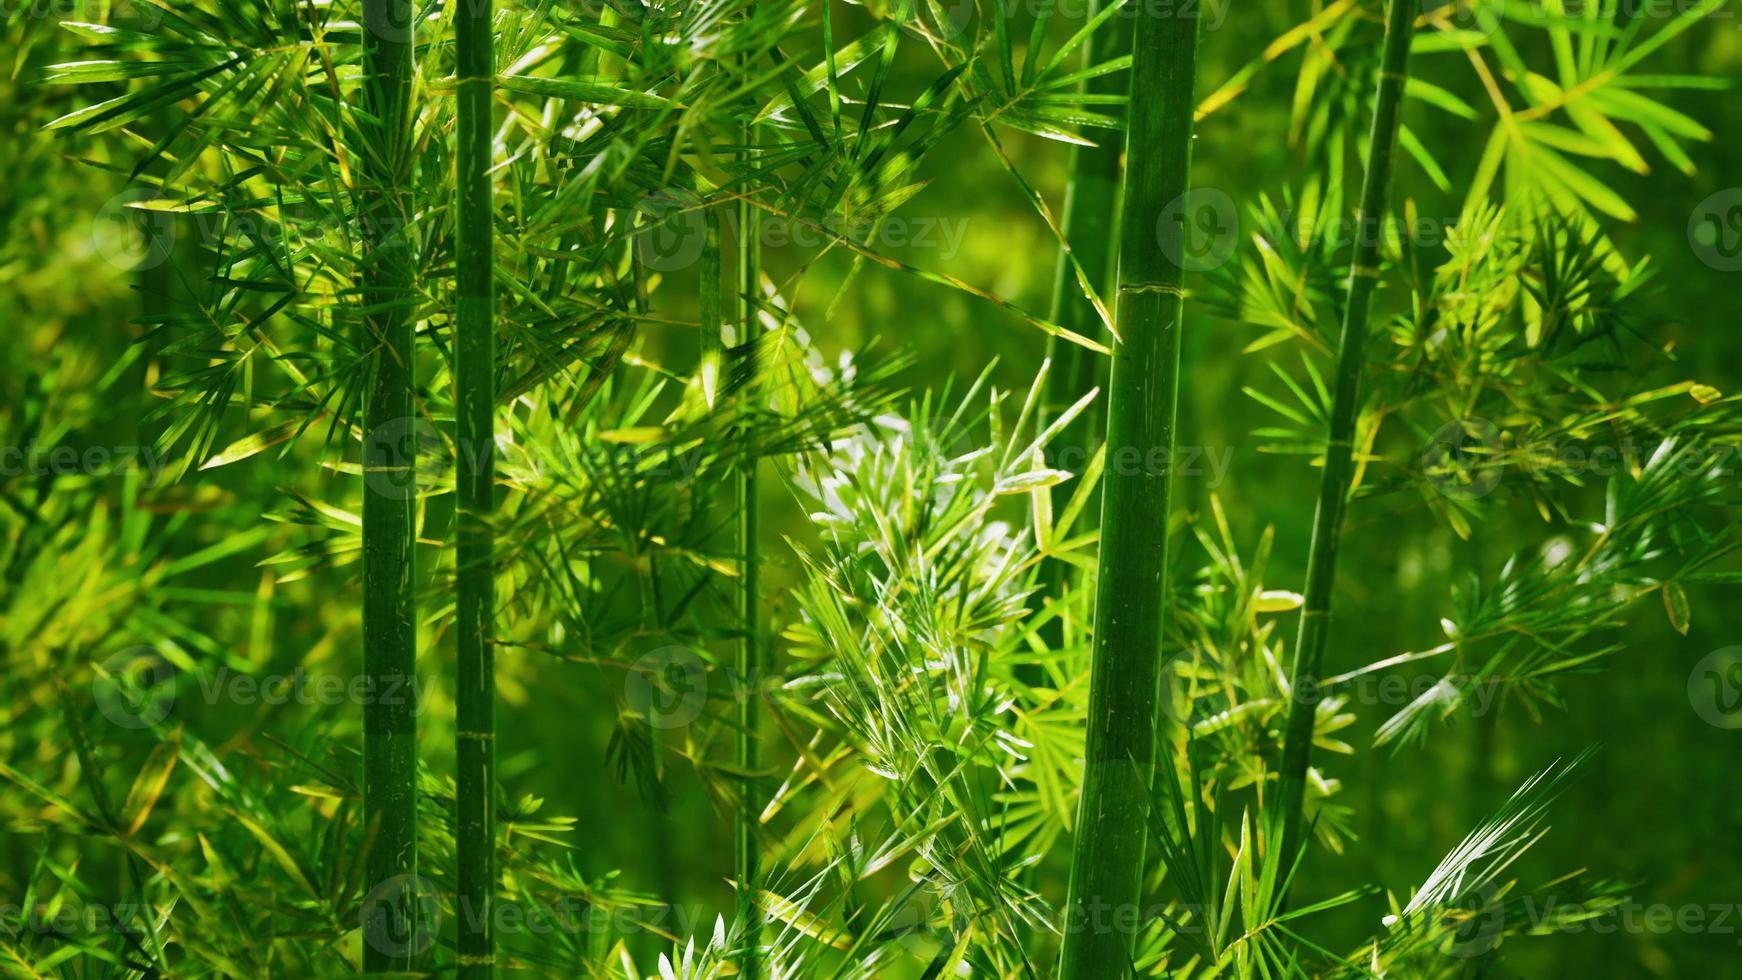 bamboebos in dichte mist foto